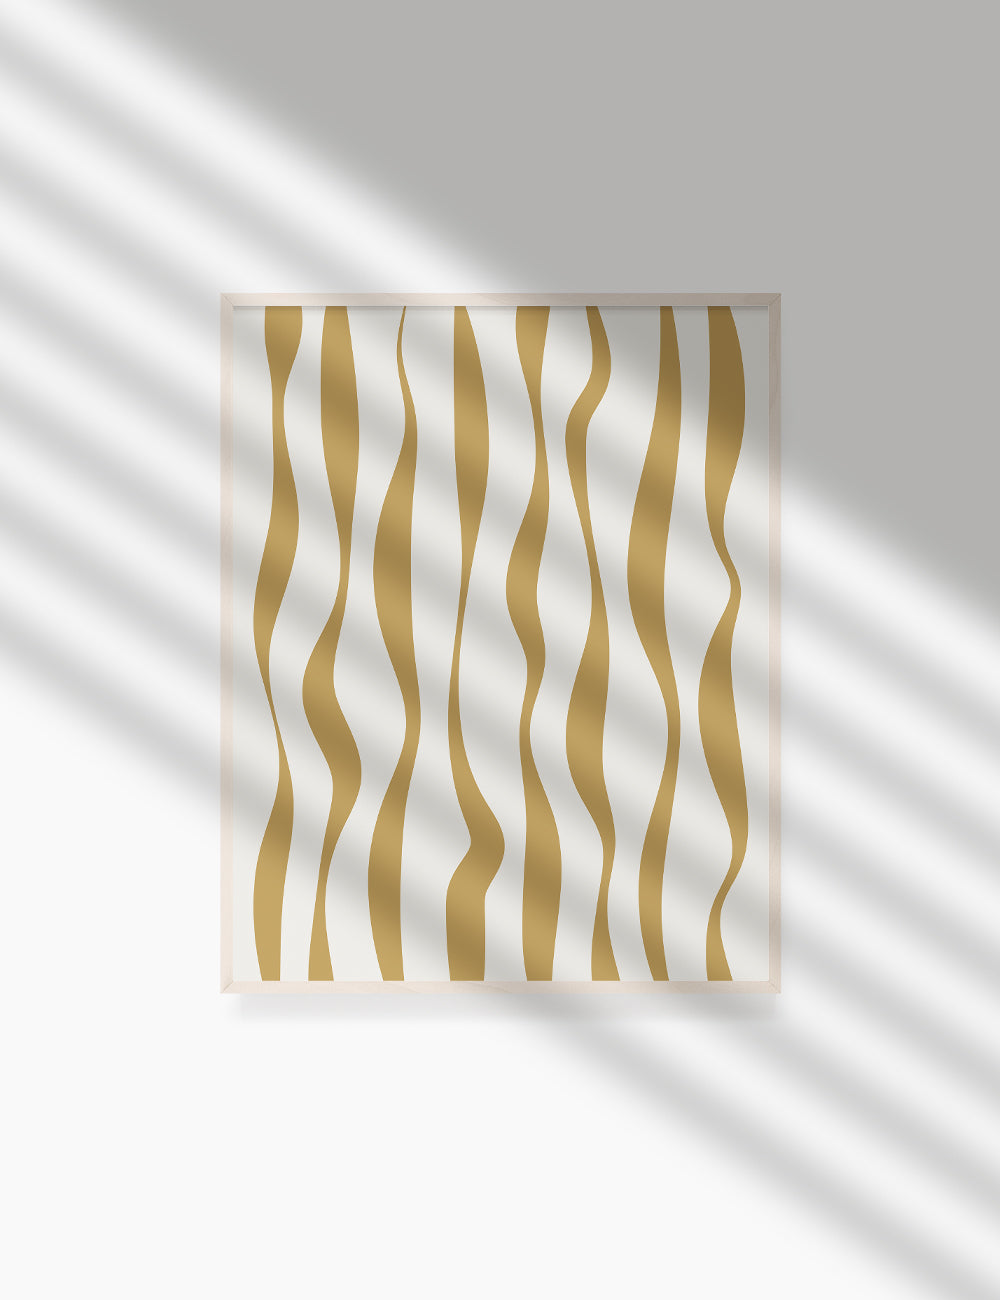 ABSTRACT MINIMAL WAVY LINES. Boho Art Print. Printable Wall Art Illustration. Wavy lines in dull orange and beige. Abstract art. Minimal design. Minimalist, abstract illustration art. Printable poster. | PAPER MOON Art & Design